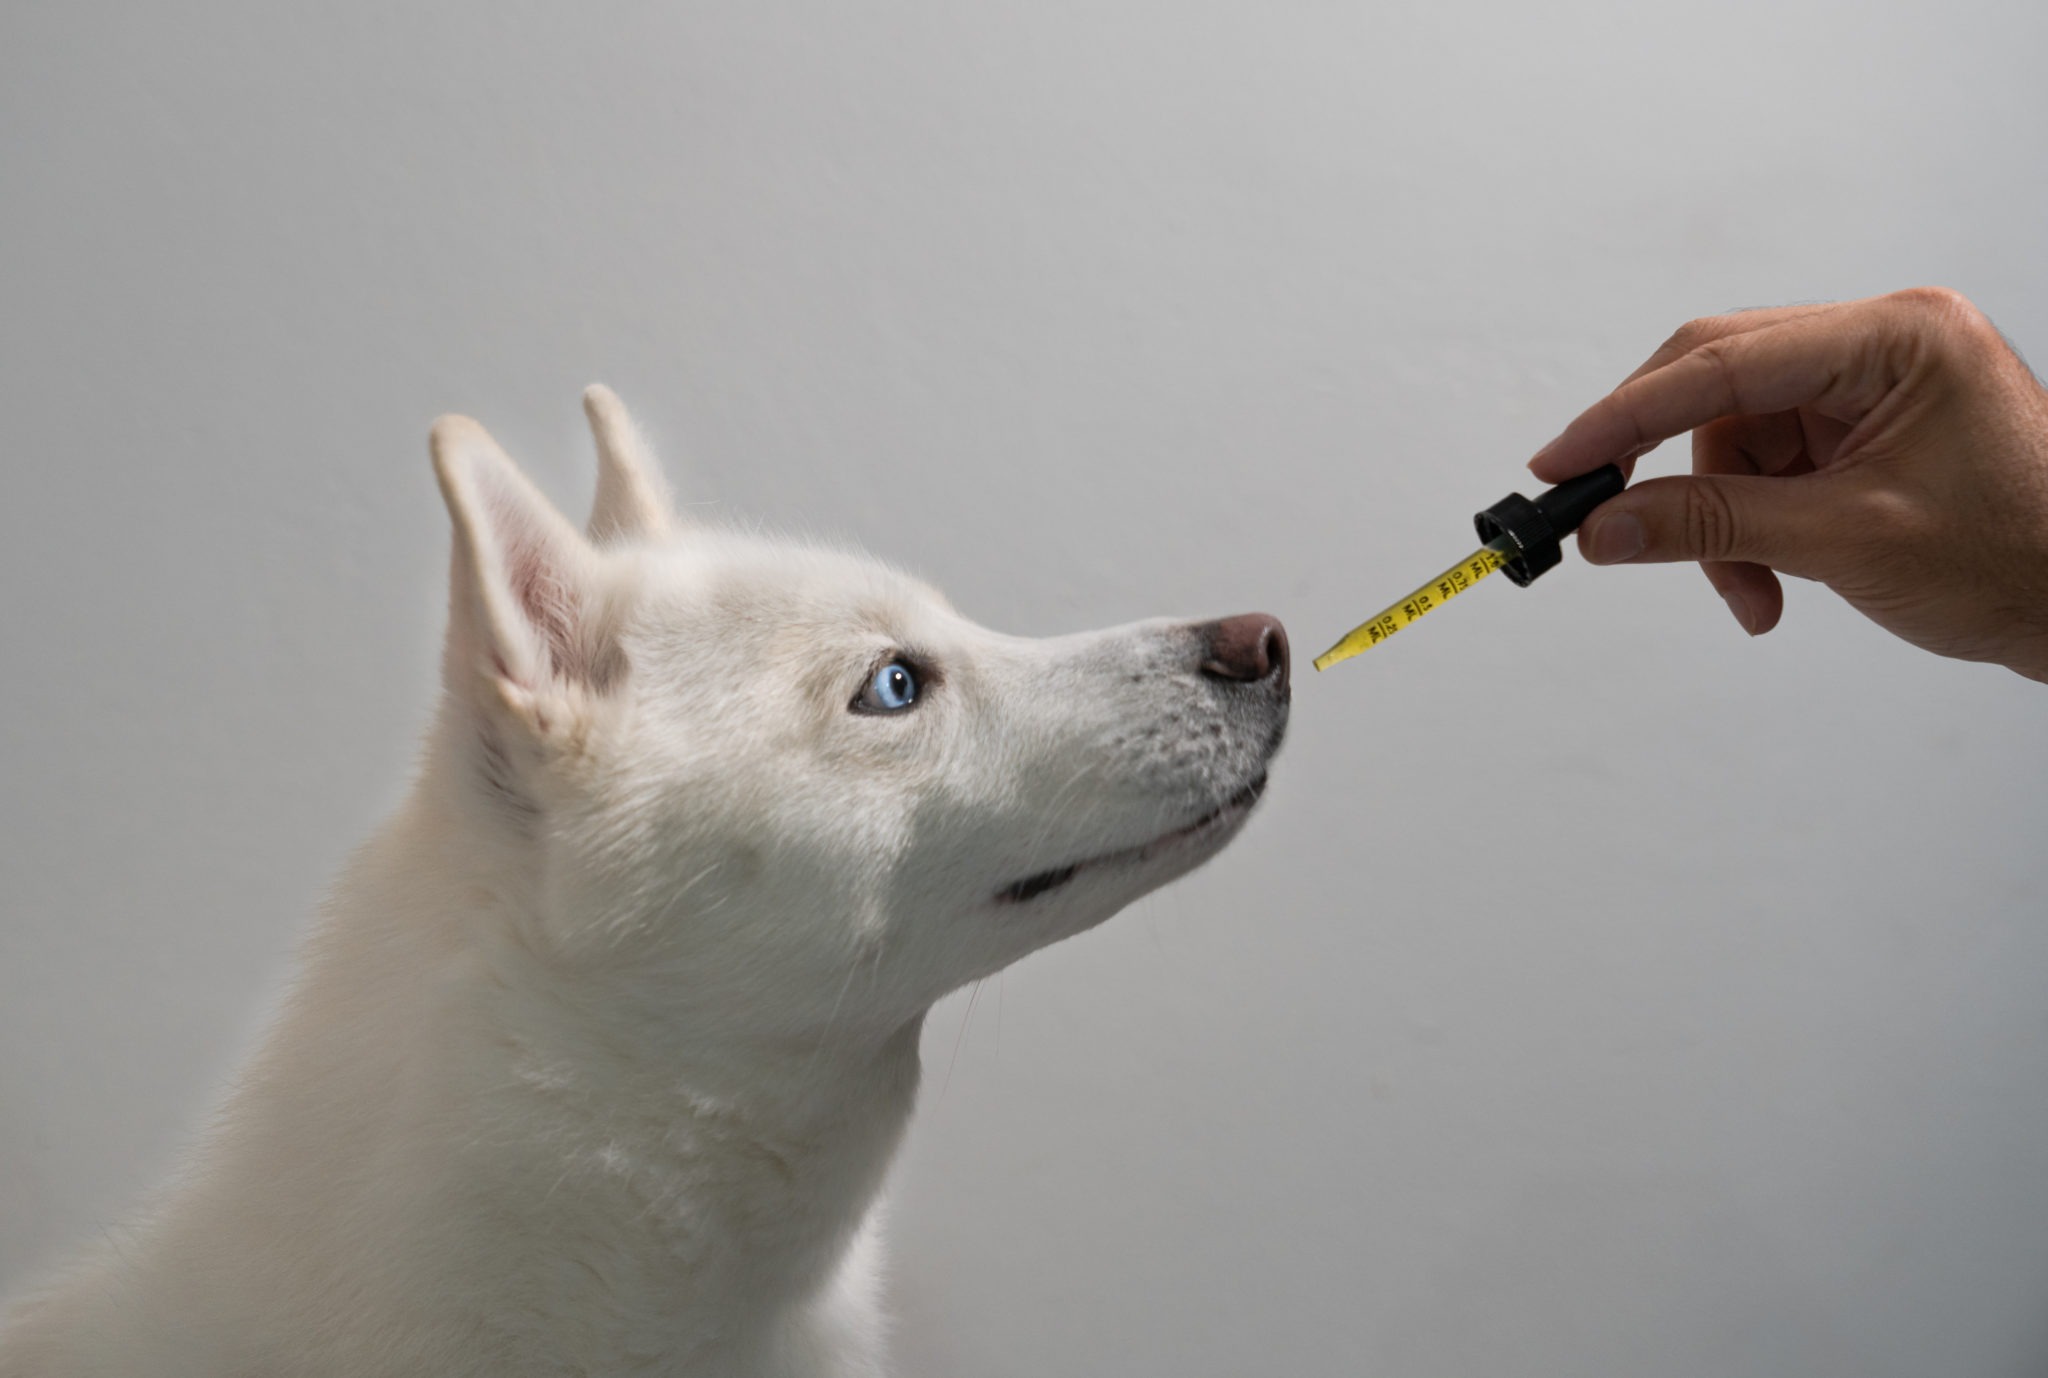 Dog taking CBD Hemp Oil from Tincture Dropper